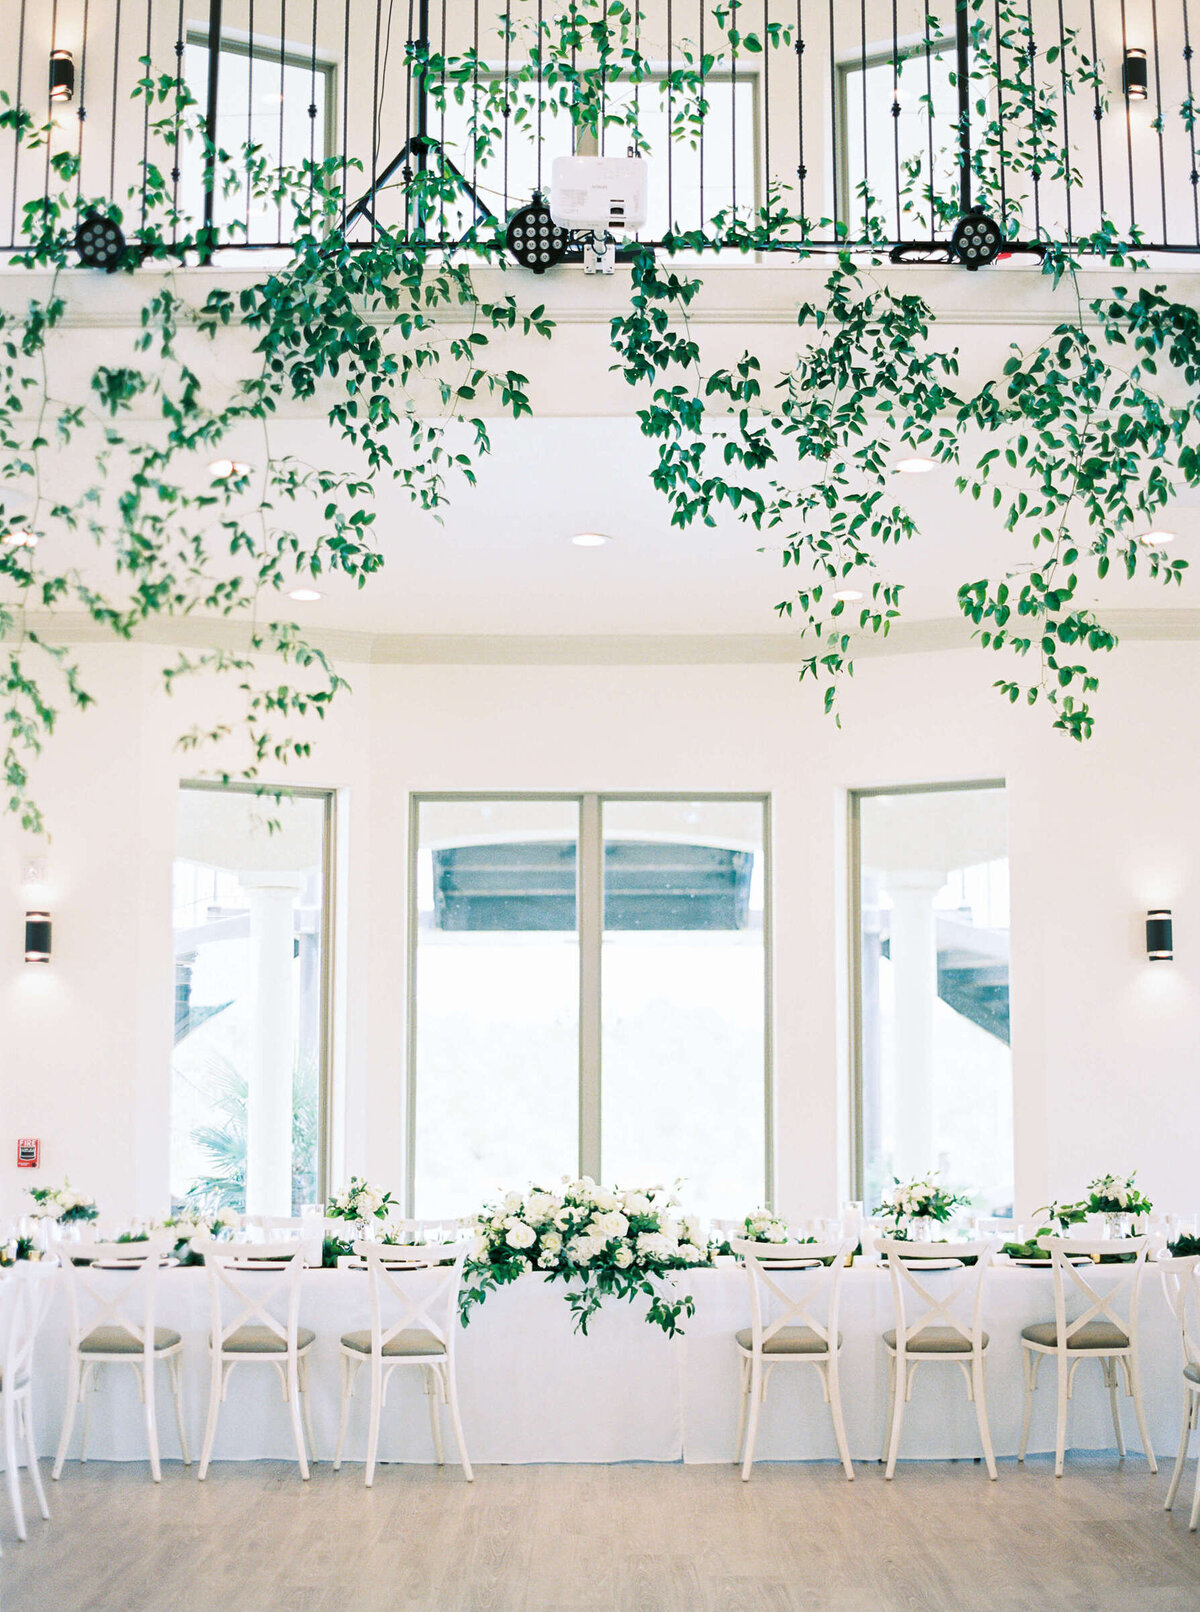 Bridal head table and greenery at D'Vine Grace Vineyard wedding